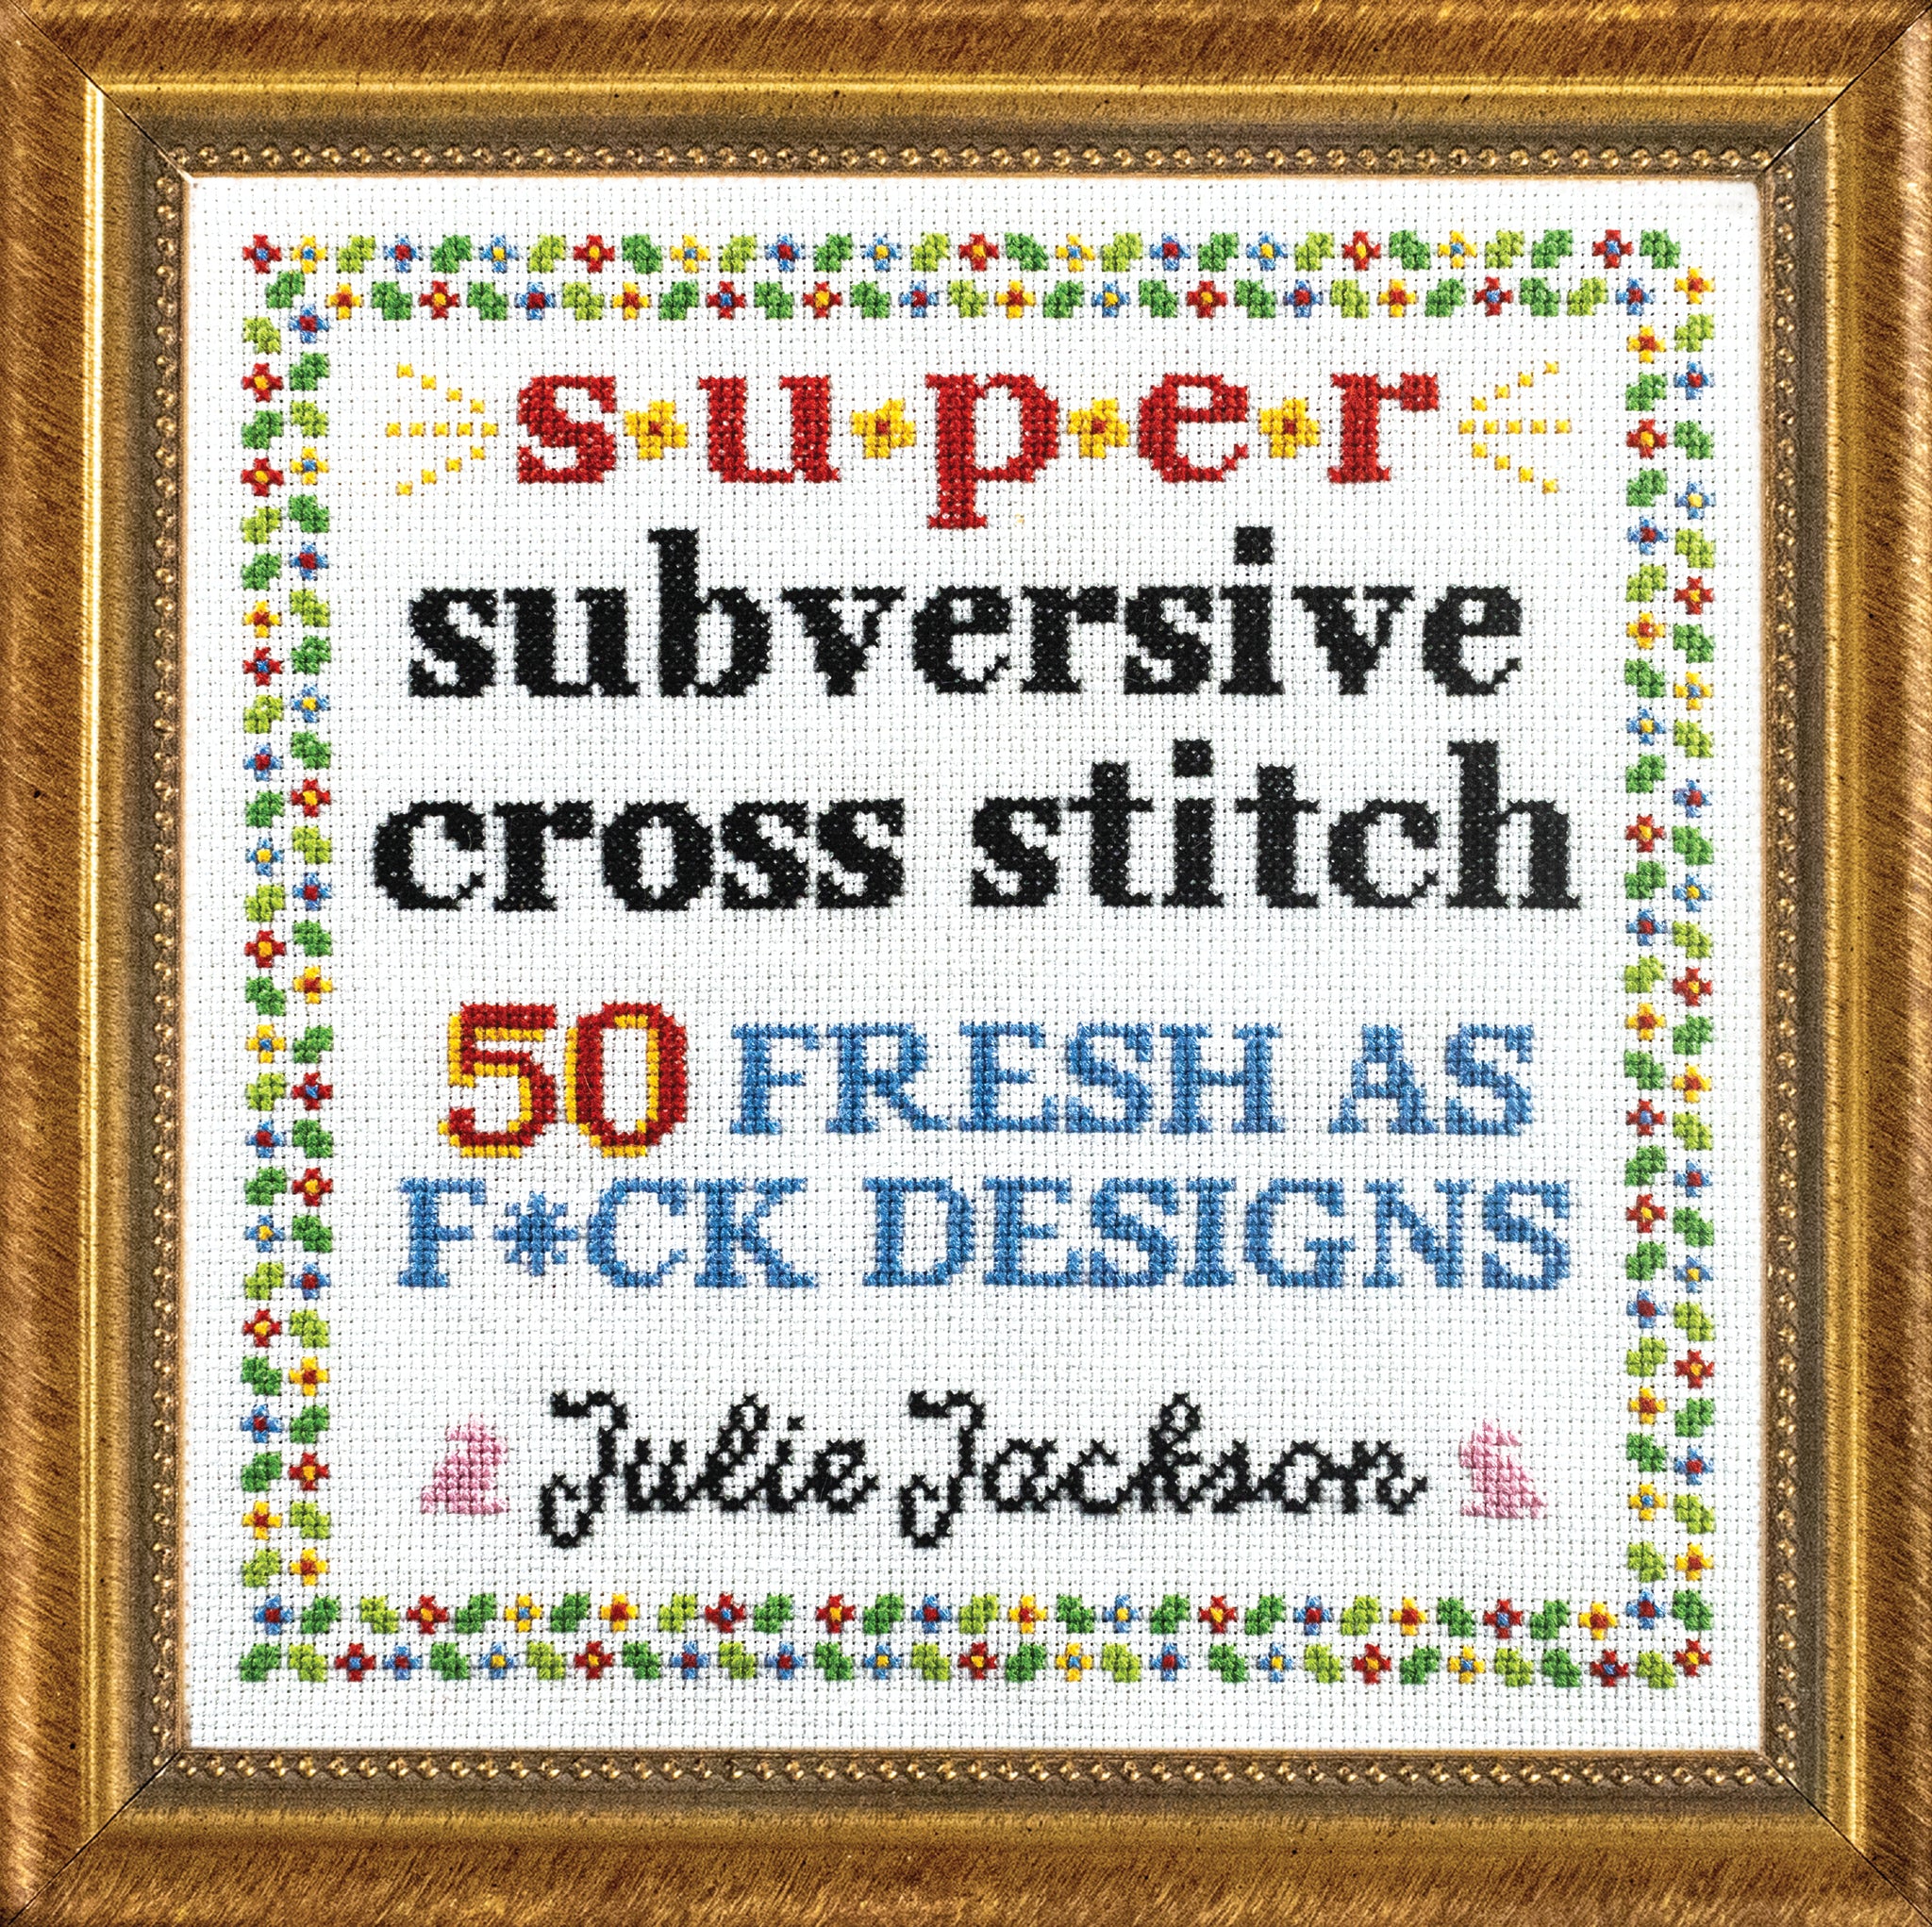 Simone's Smalls - Cross Stitch Pattern book By Soed Idee – A